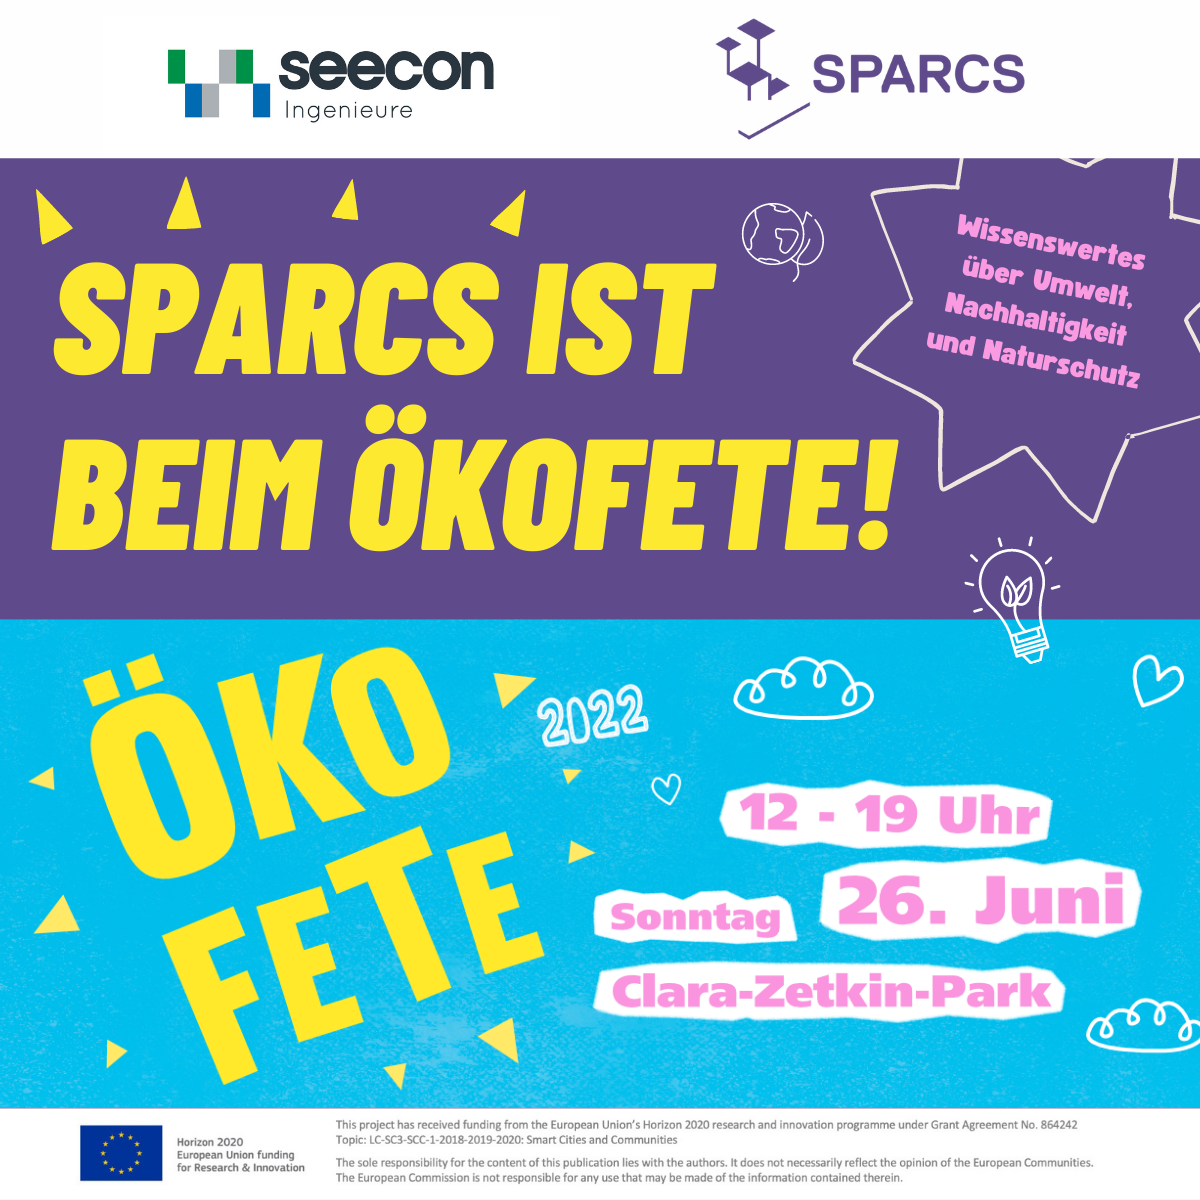 SPARCS meets Leipziger Ökofete 2022